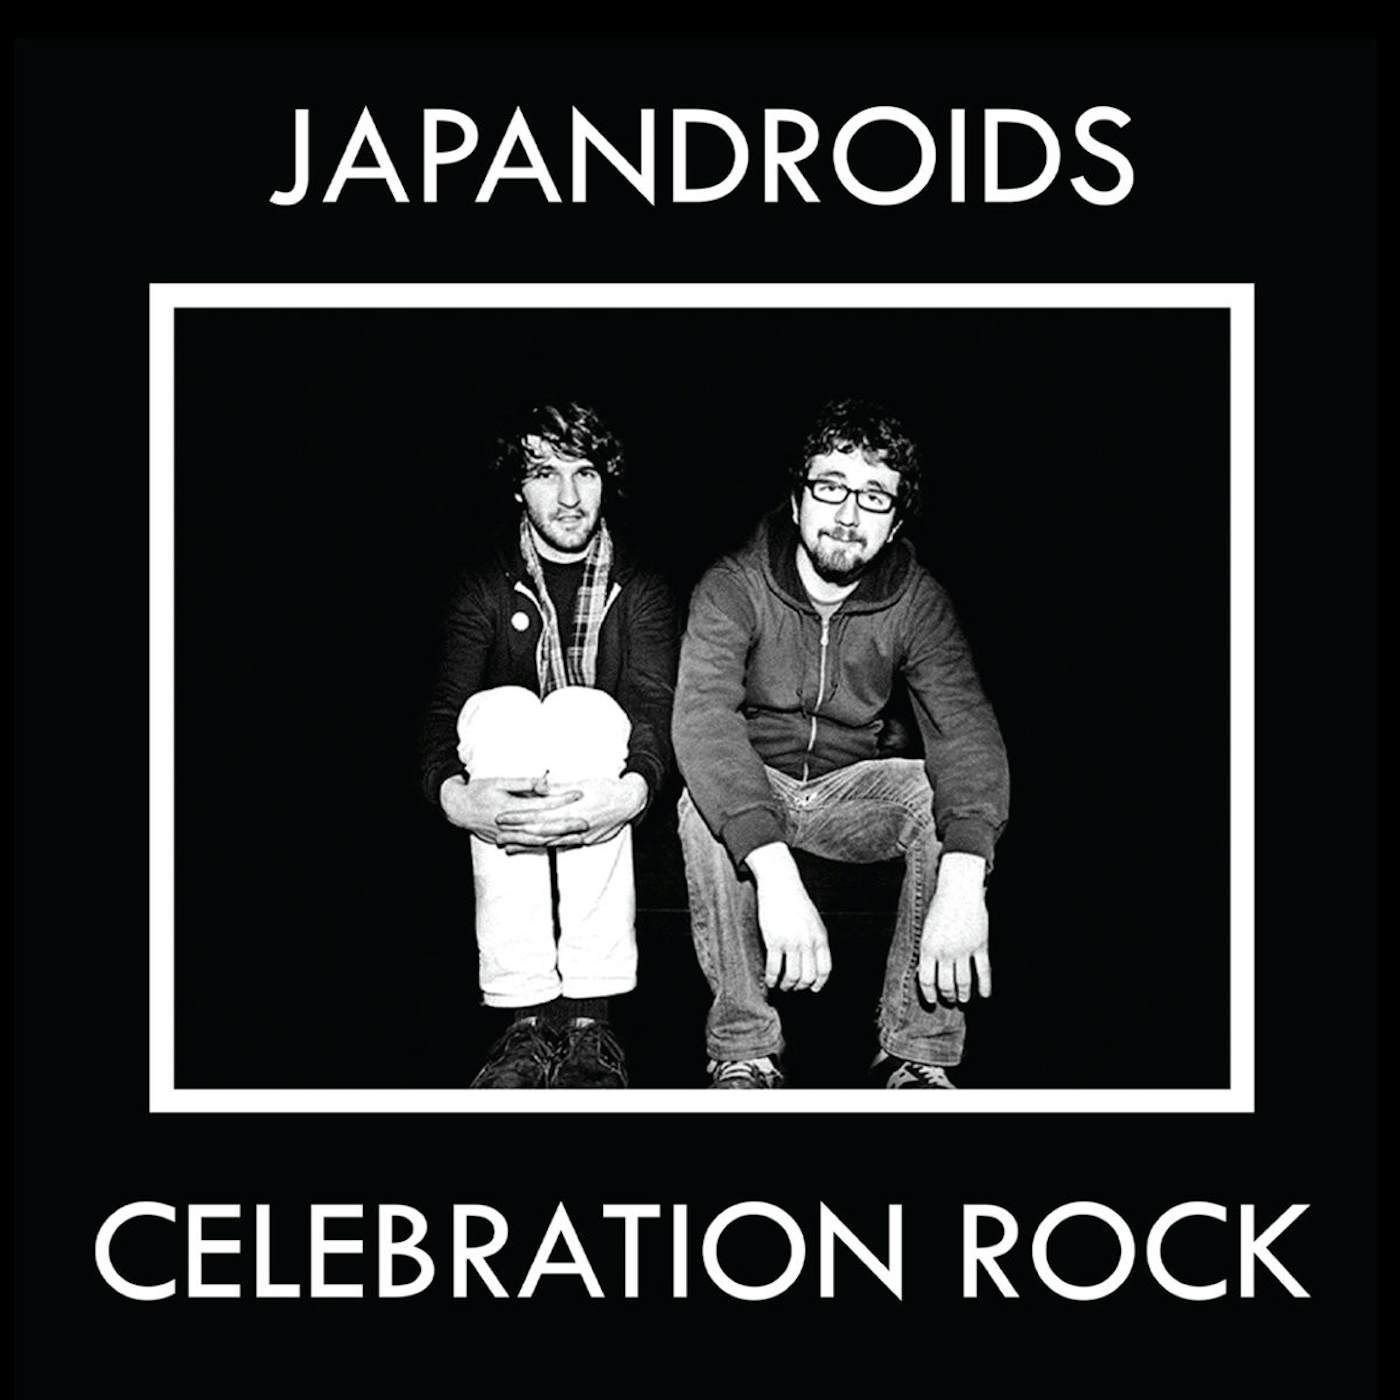 Japandroids Celebration Rock Vinyl Record